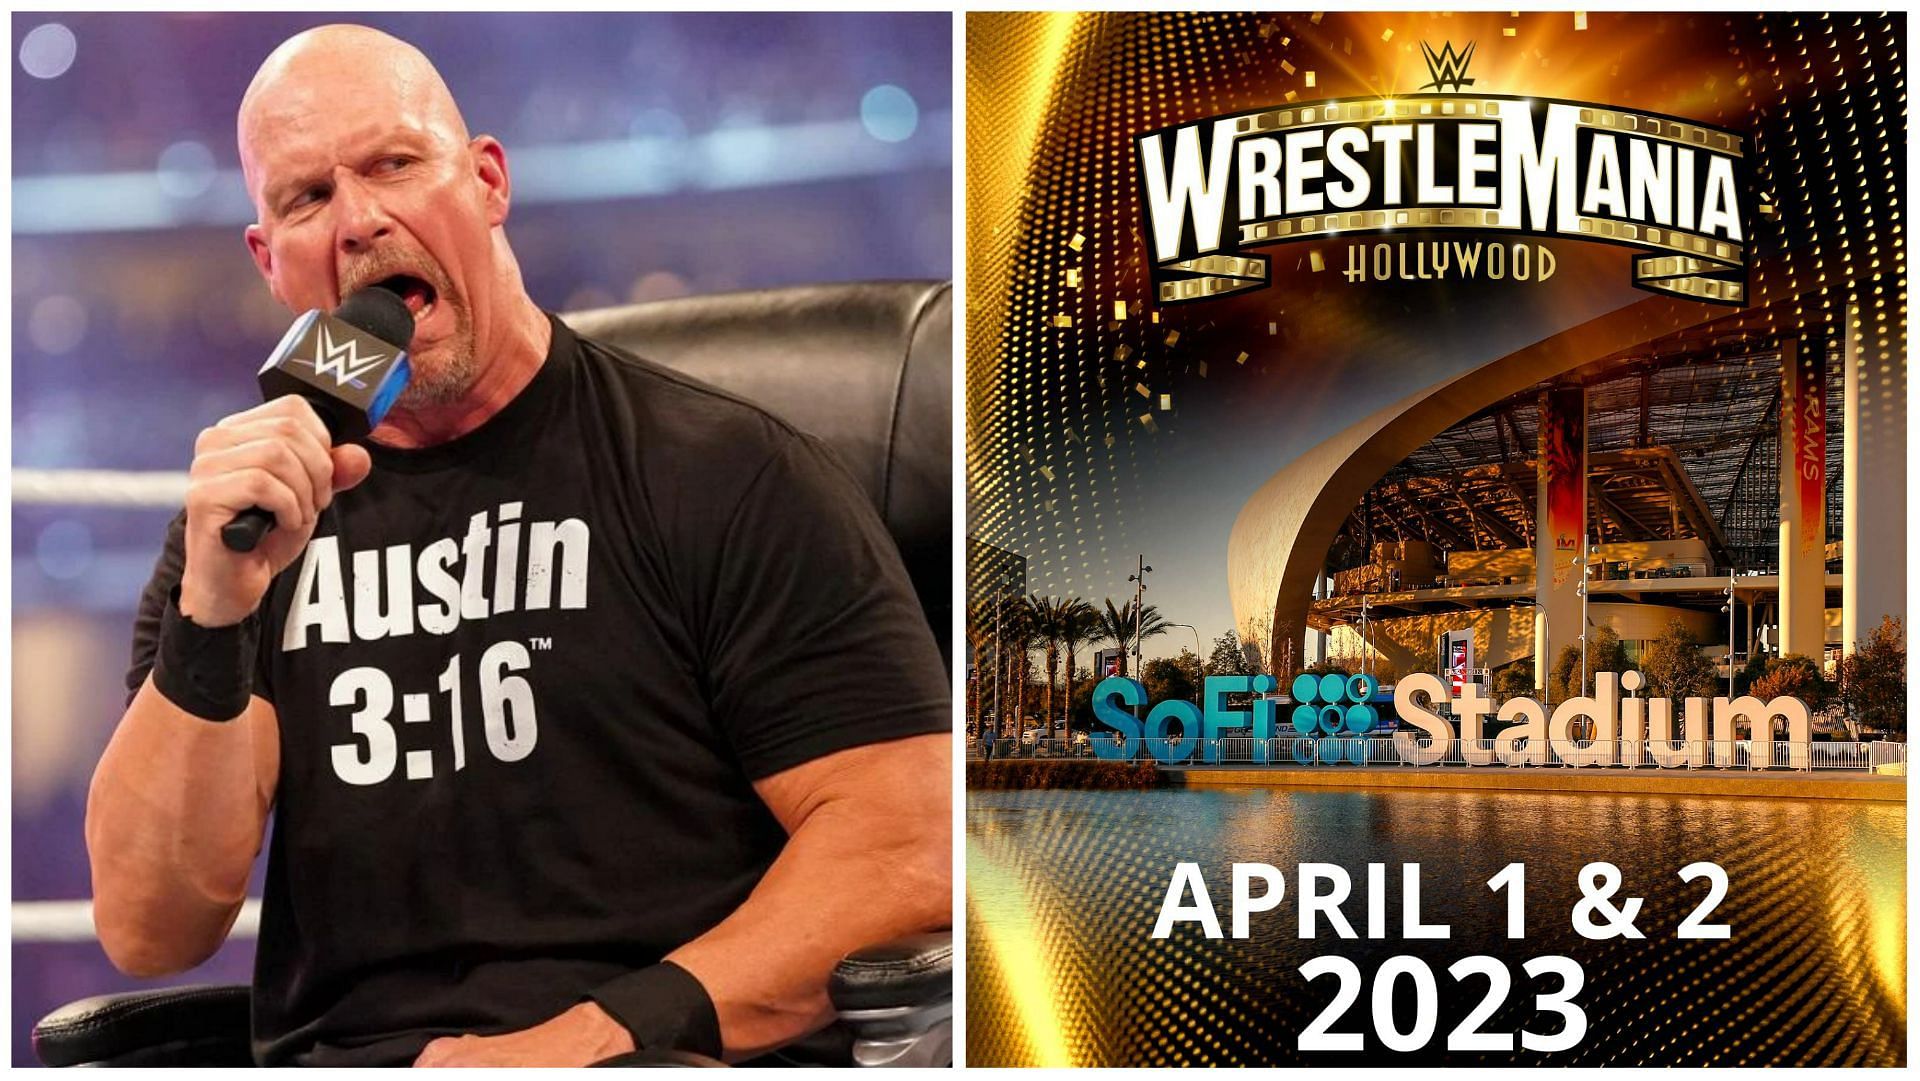 WWE legend Stone Cold Steve Austin (left), An advertisement for WrestleMania 39 (right)